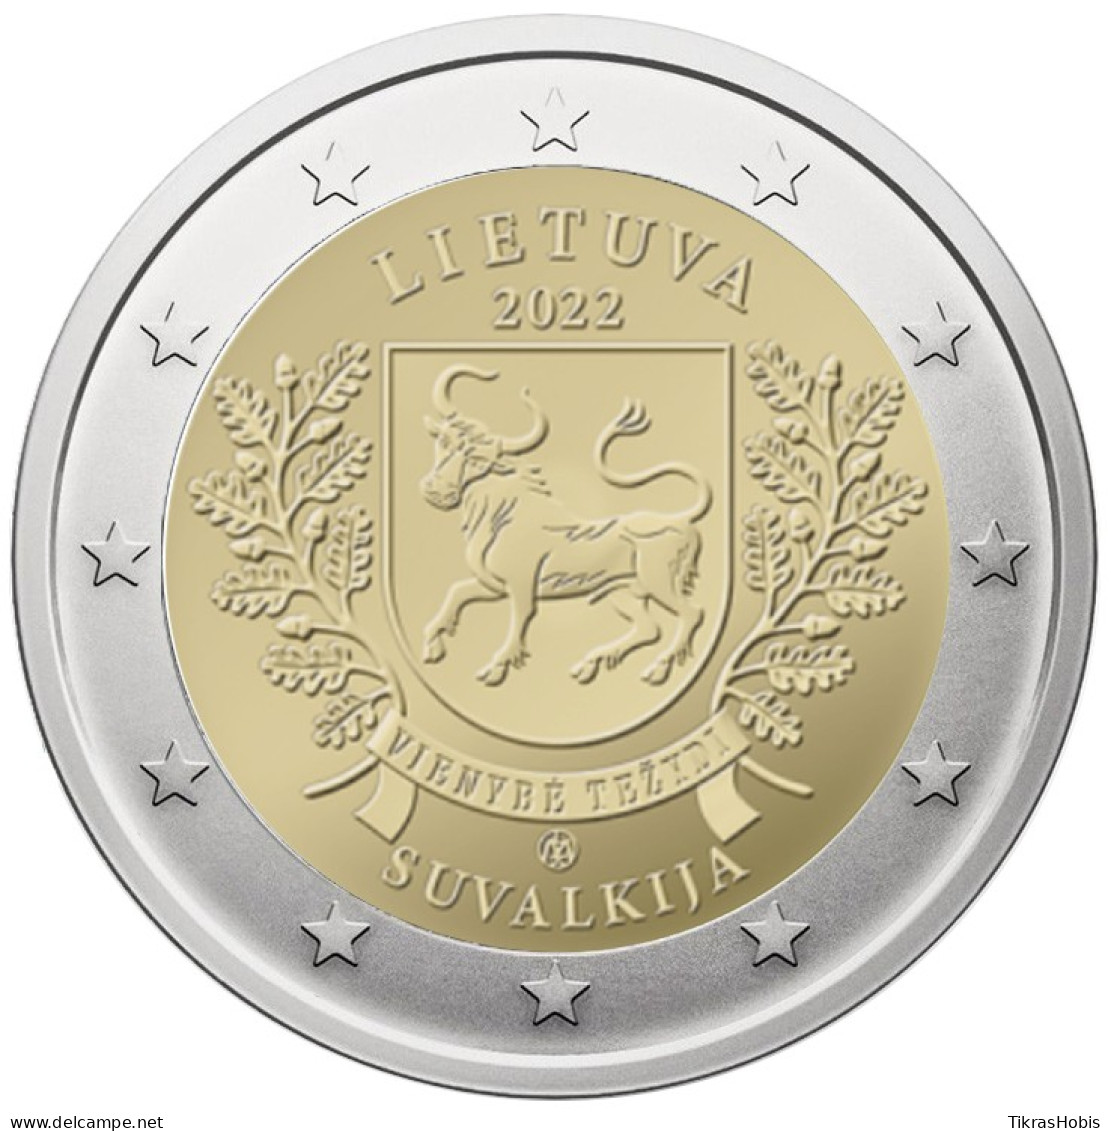 Lithuania 2 Euro, 2022 Suvalkija - Lituania